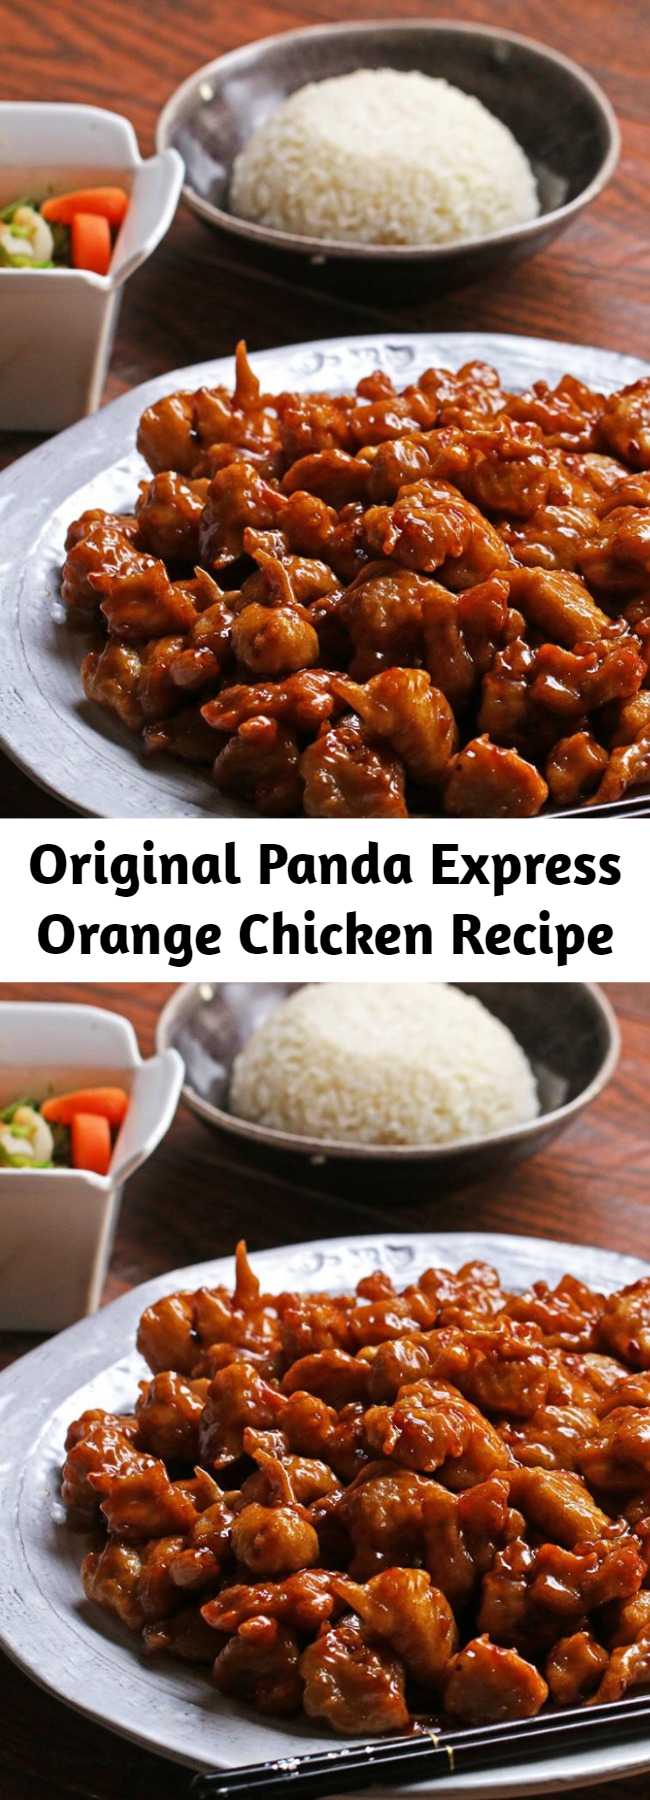 Original Panda Express Orange Chicken Recipe - The Original Orange Chicken by Panda Express